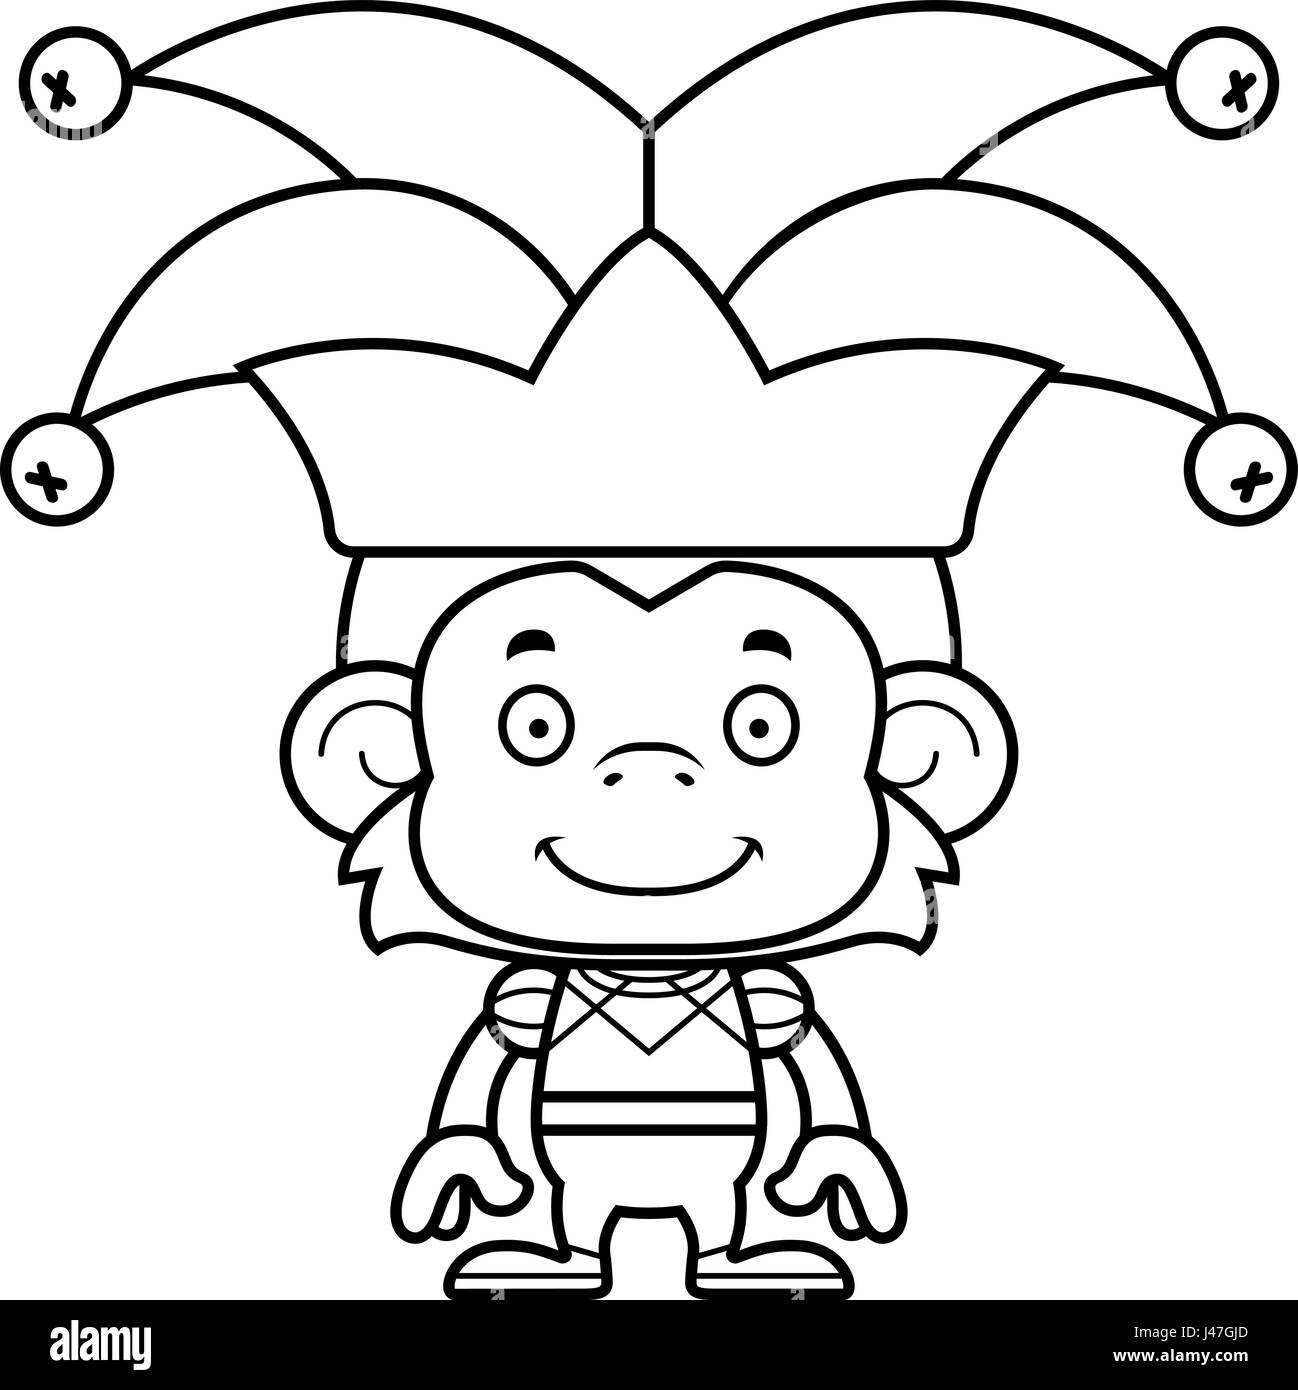 A cartoon jester monkey smiling Stock Vector Image & Art - Alamy